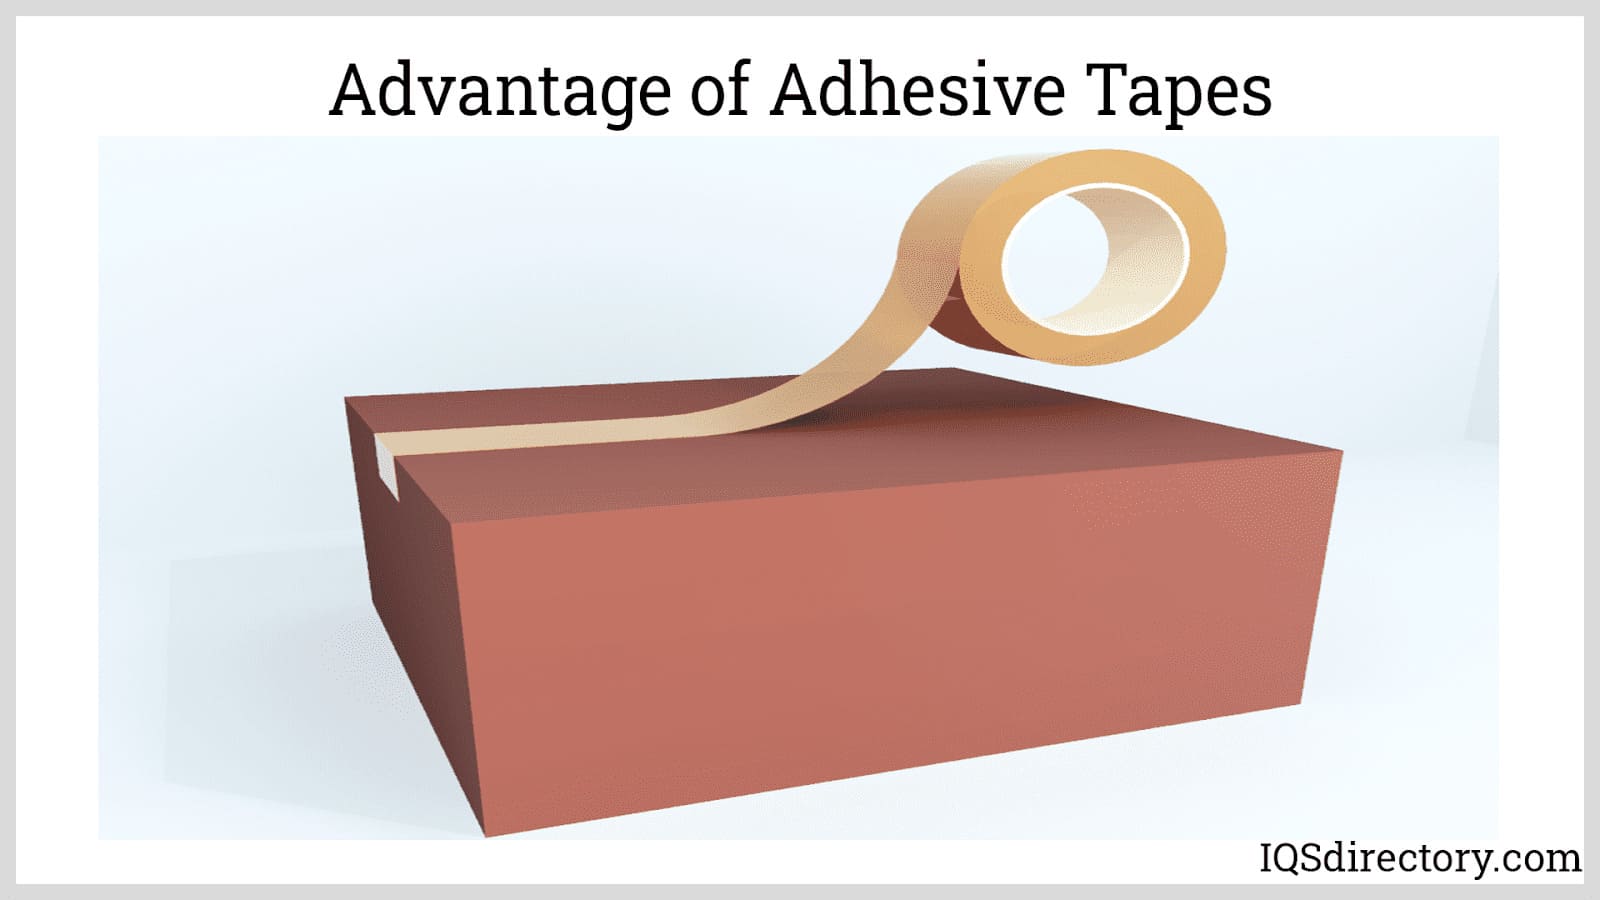 Advantage of Adhesive Tapes